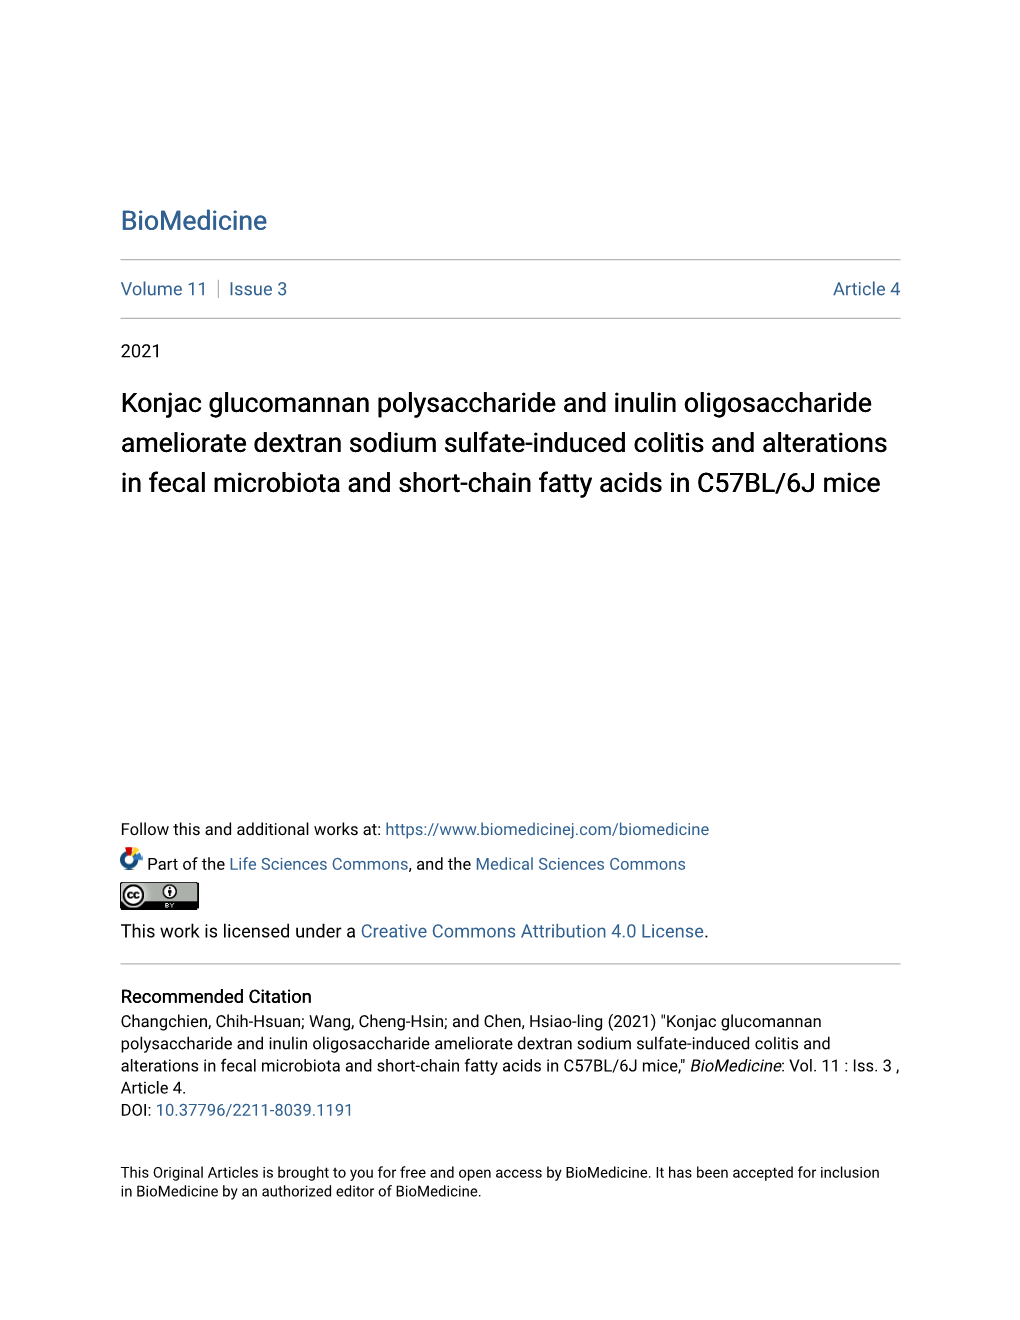 Konjac Glucomannan Polysaccharide and Inulin